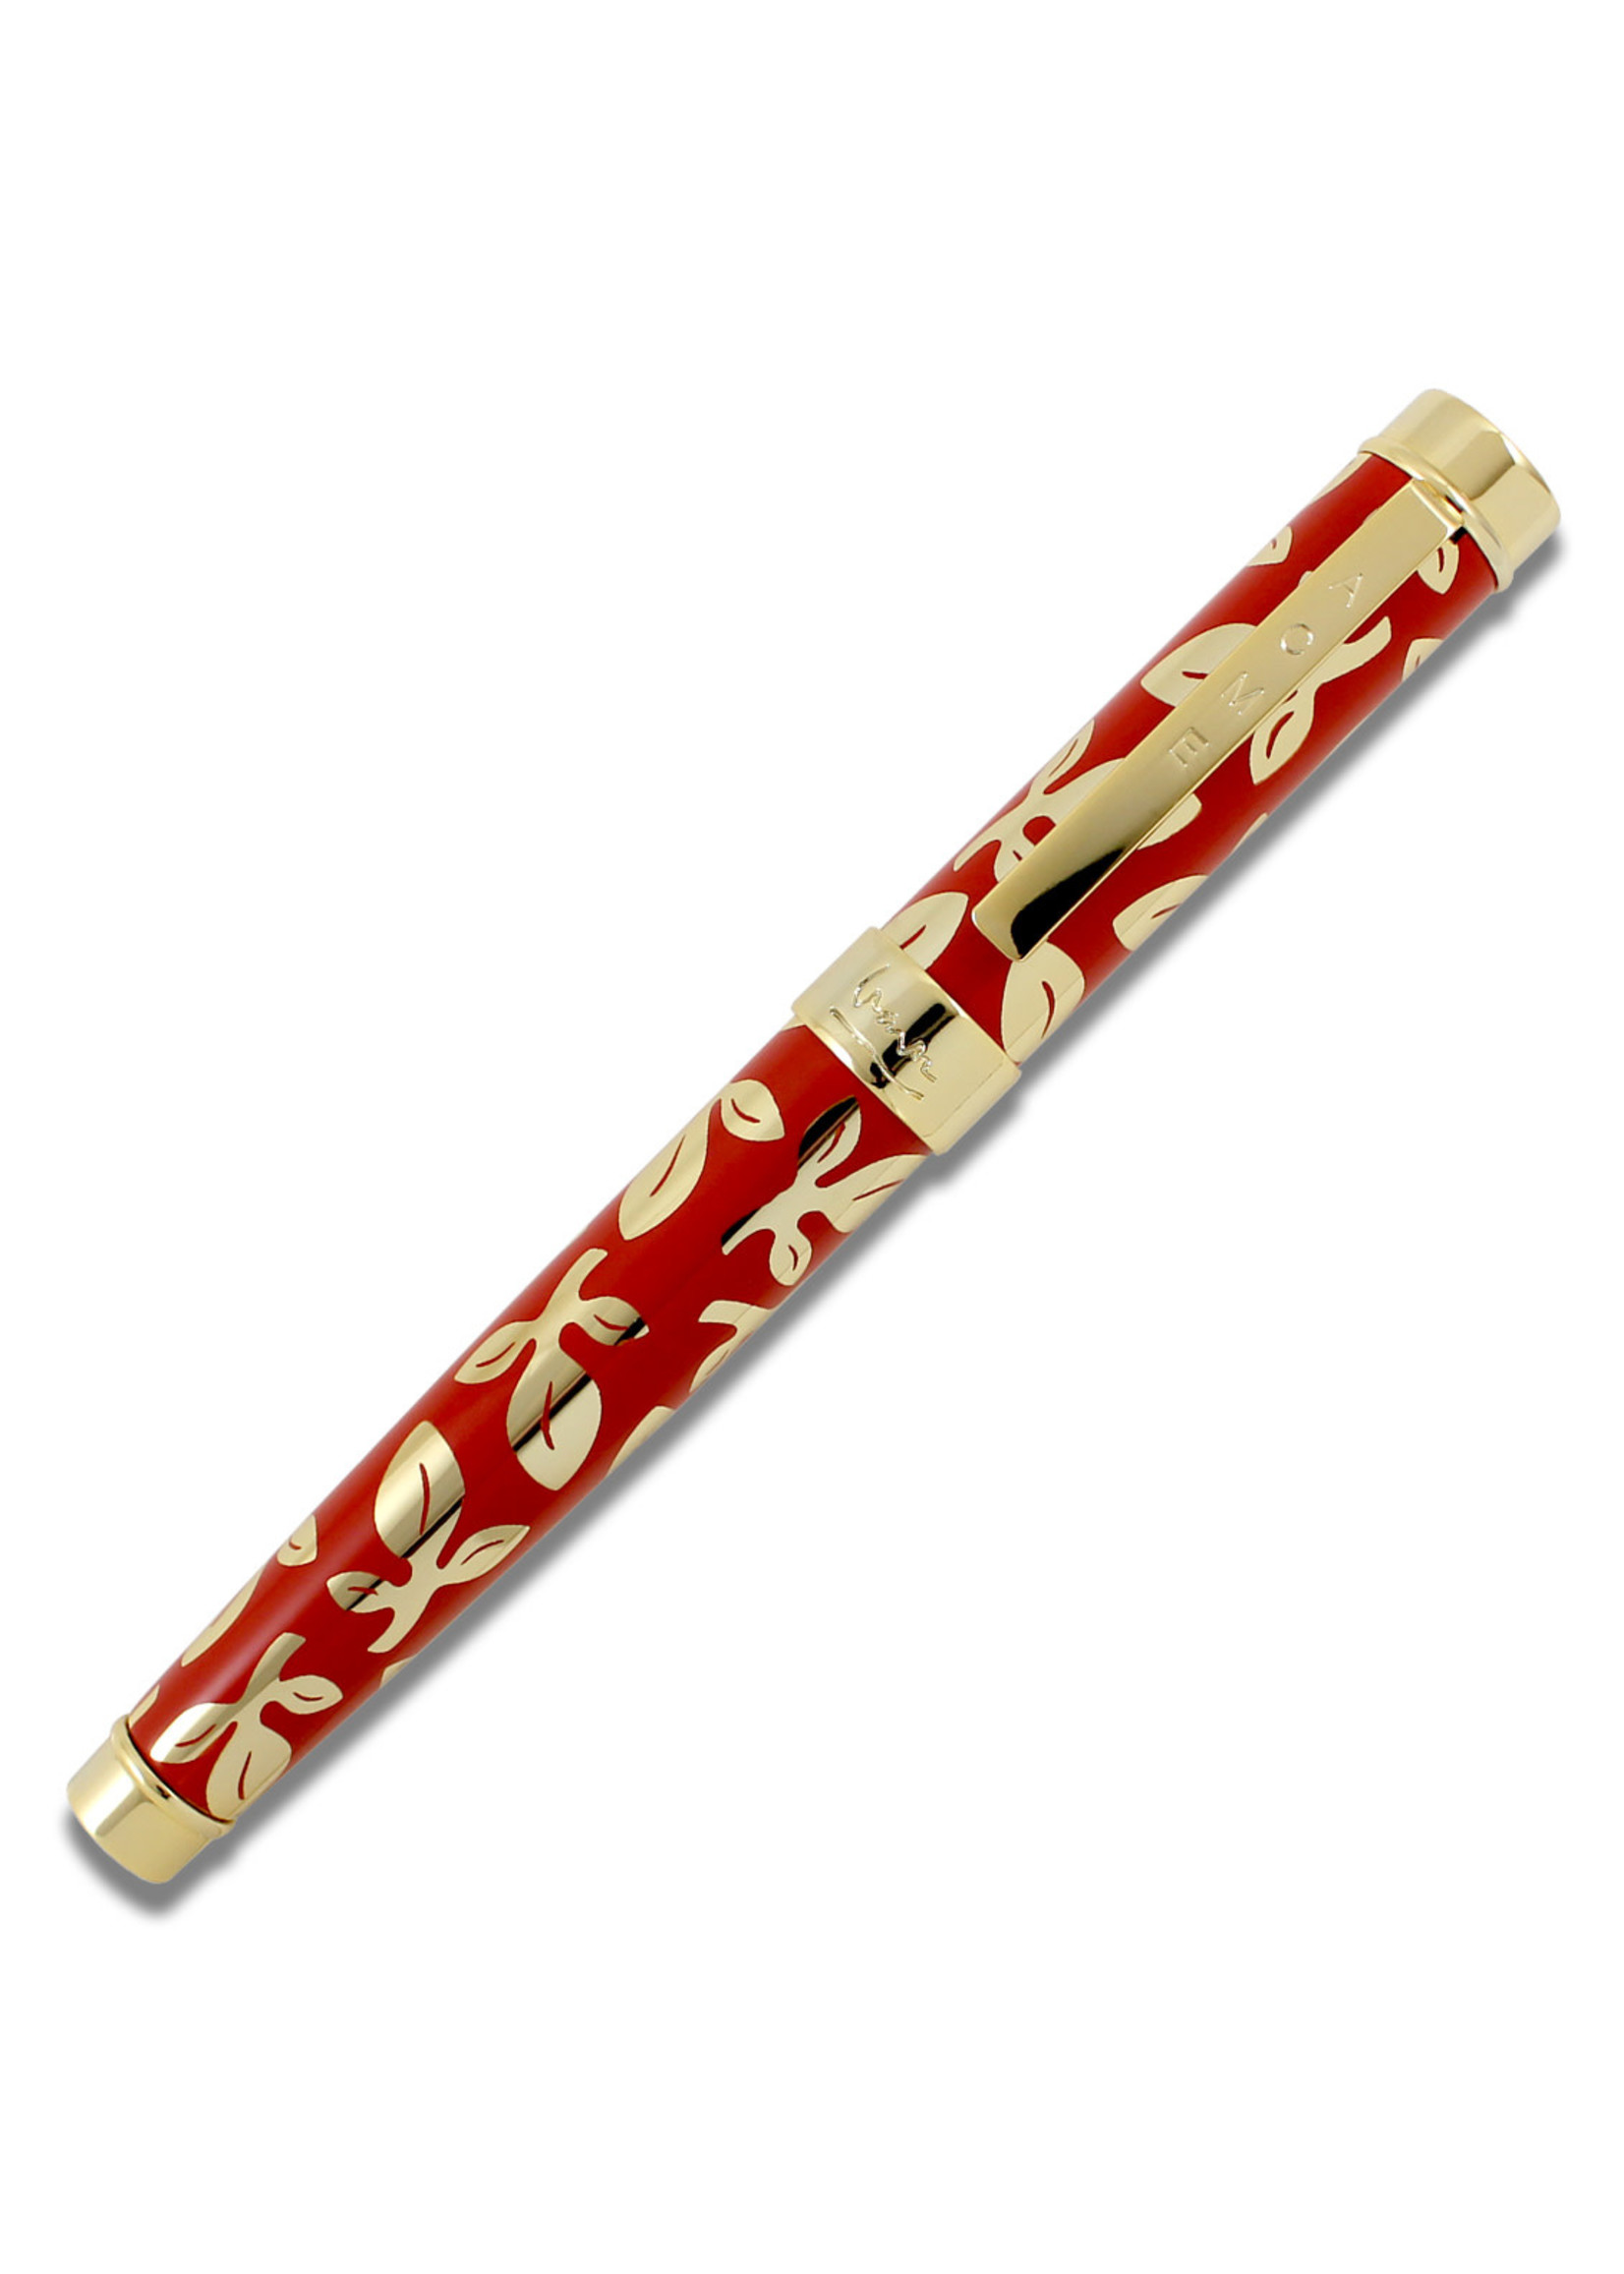 Acme Leaf-Red Hybrid Rollerball Pen